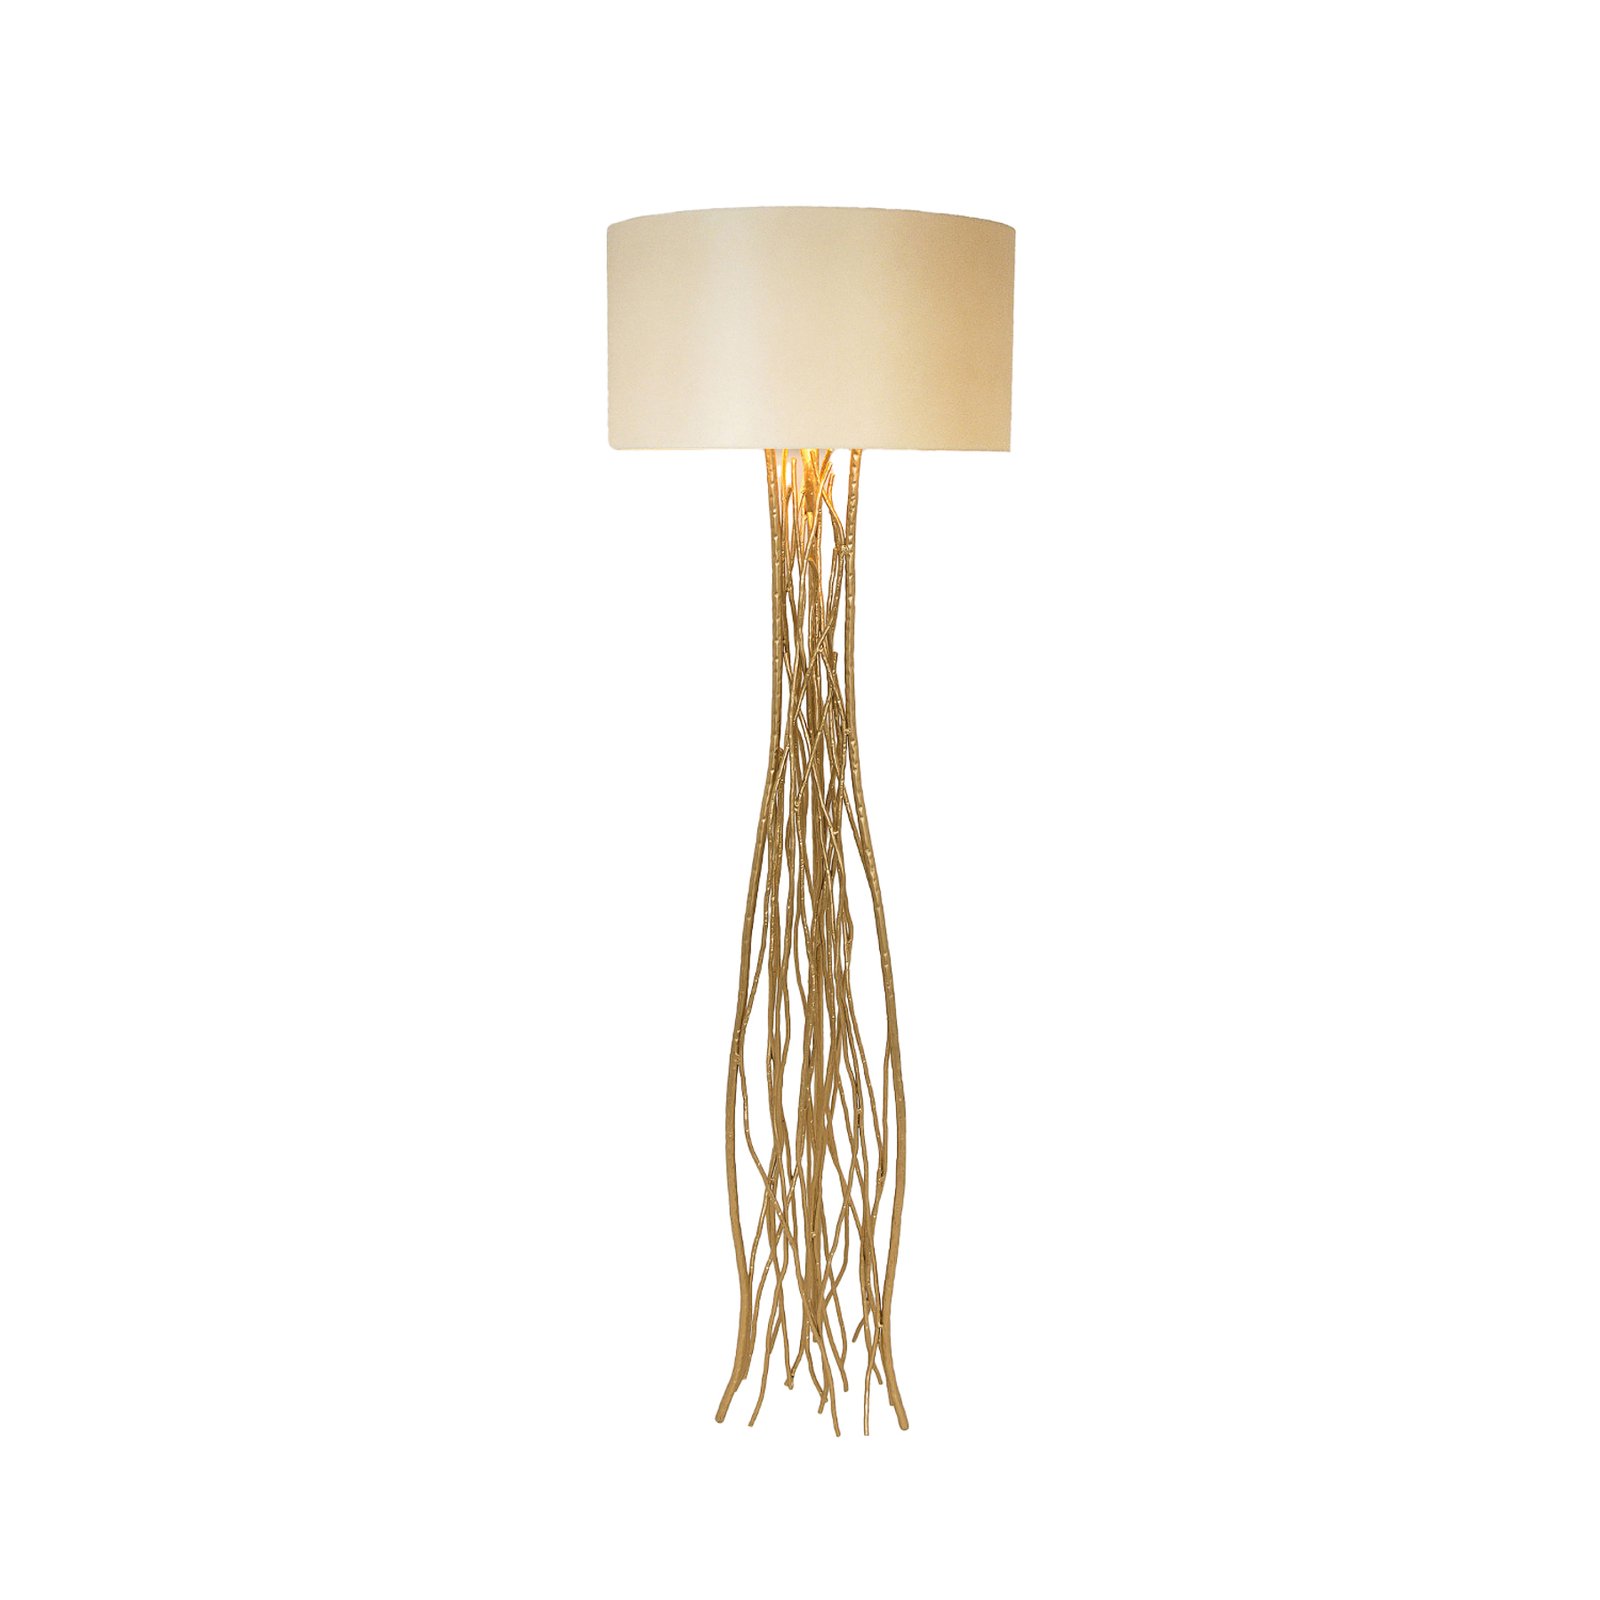 Vloerlamp Capri, goud/ecru, hoogte 155 cm, gehamerd ijzer